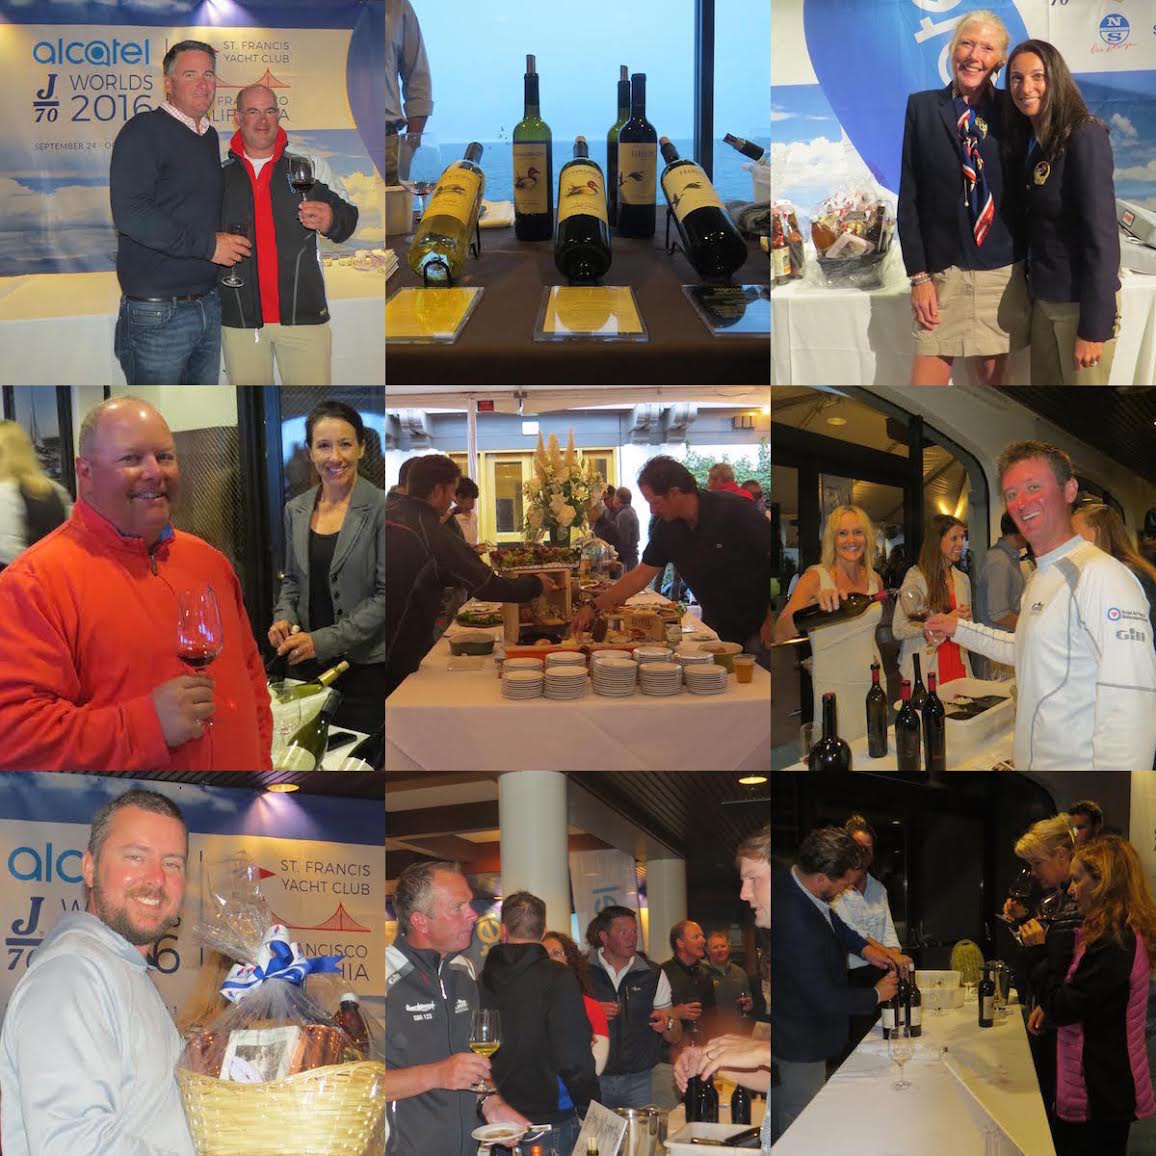 j/70 worlds wine tasting, st. francis yacht club, san francisco. sailcouture.com